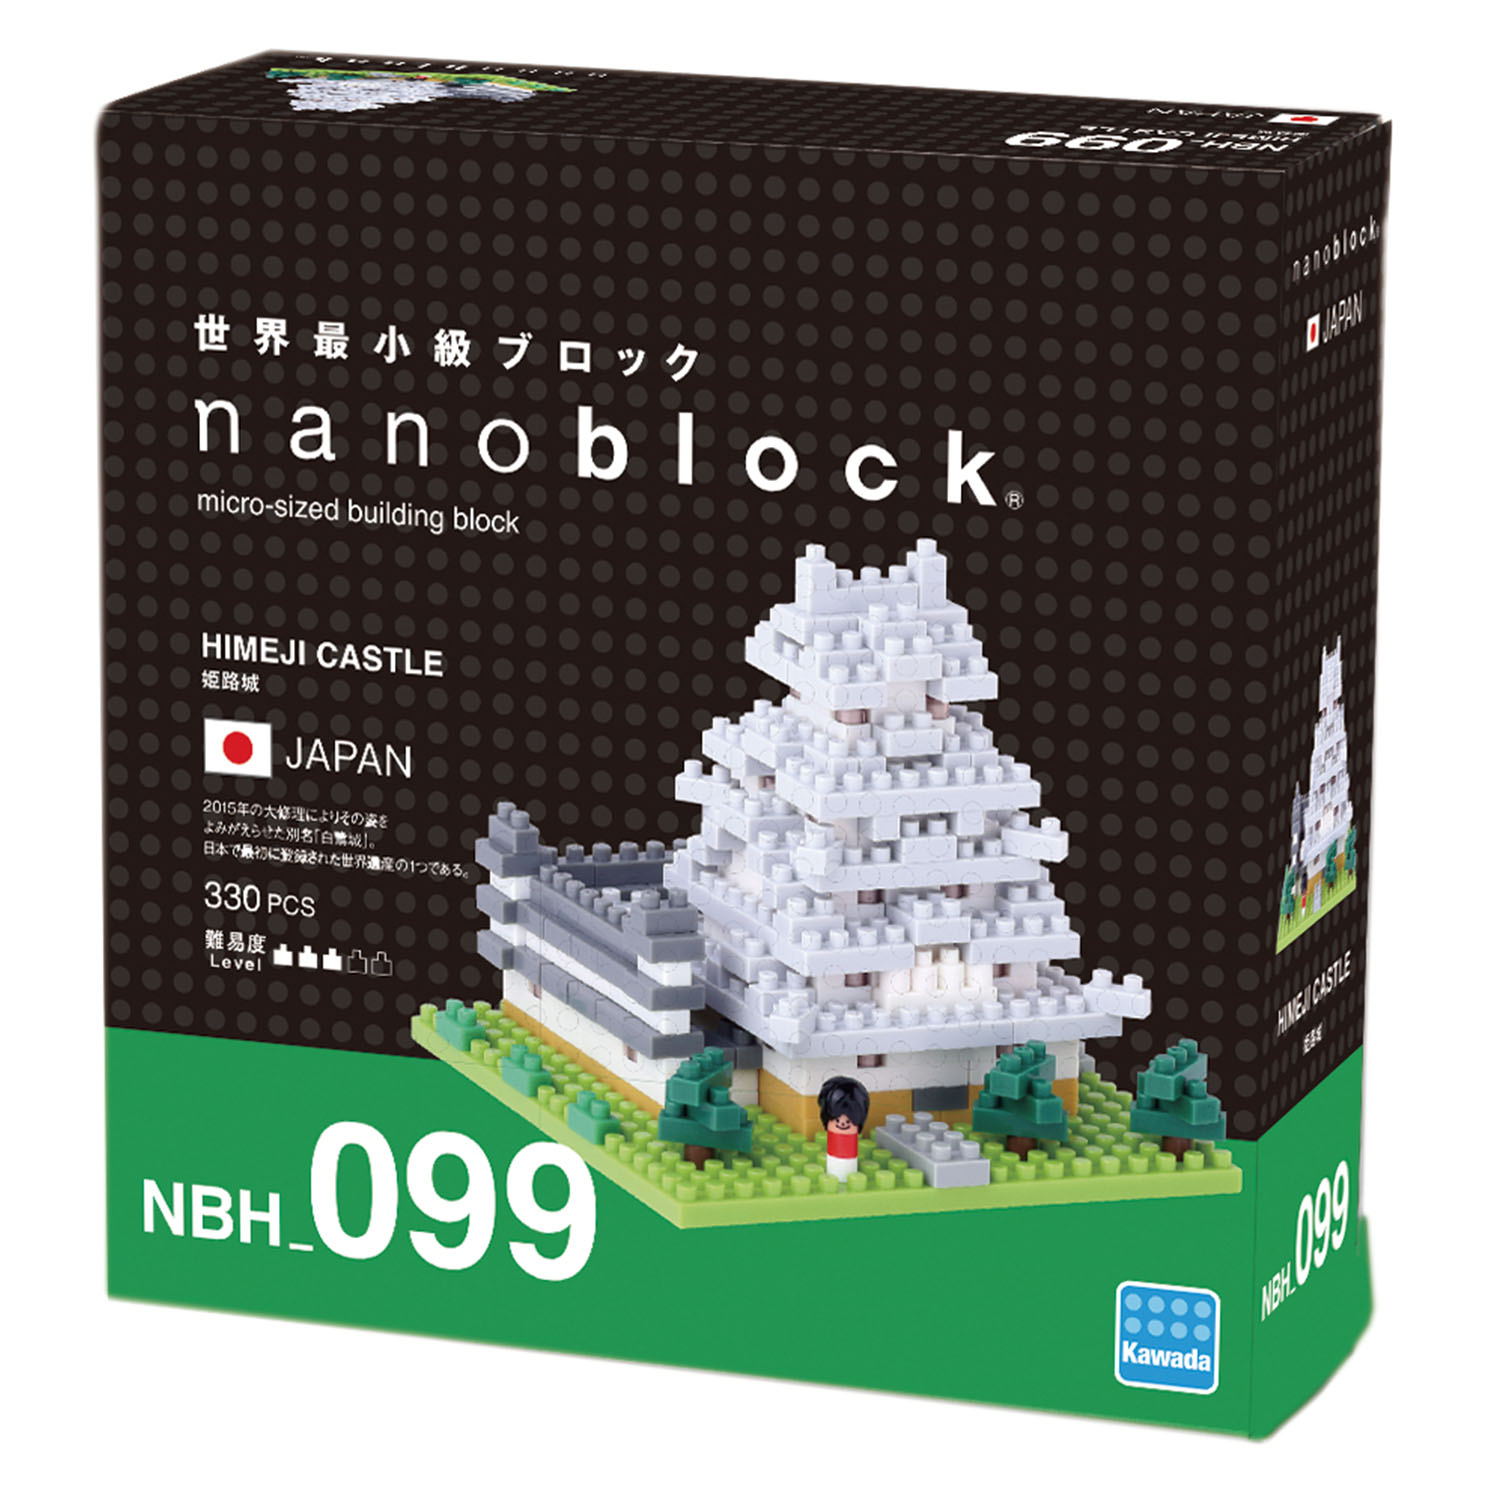 nanoblock Himeji Castle verpackt